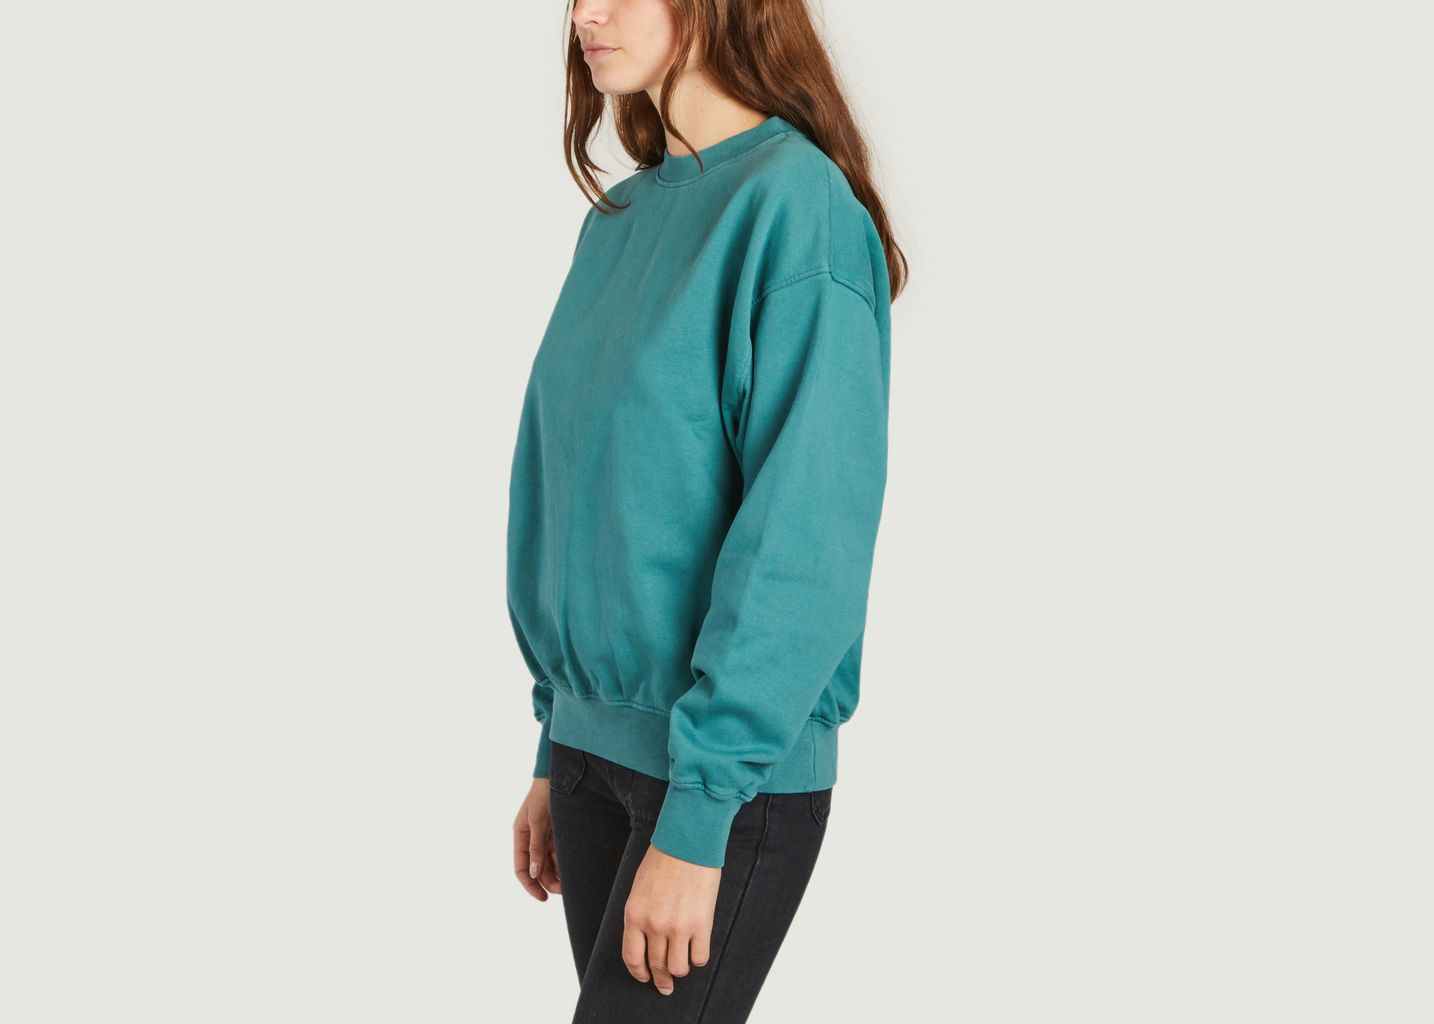 Oversized organic cotton sweatshirt - Colorful Standard